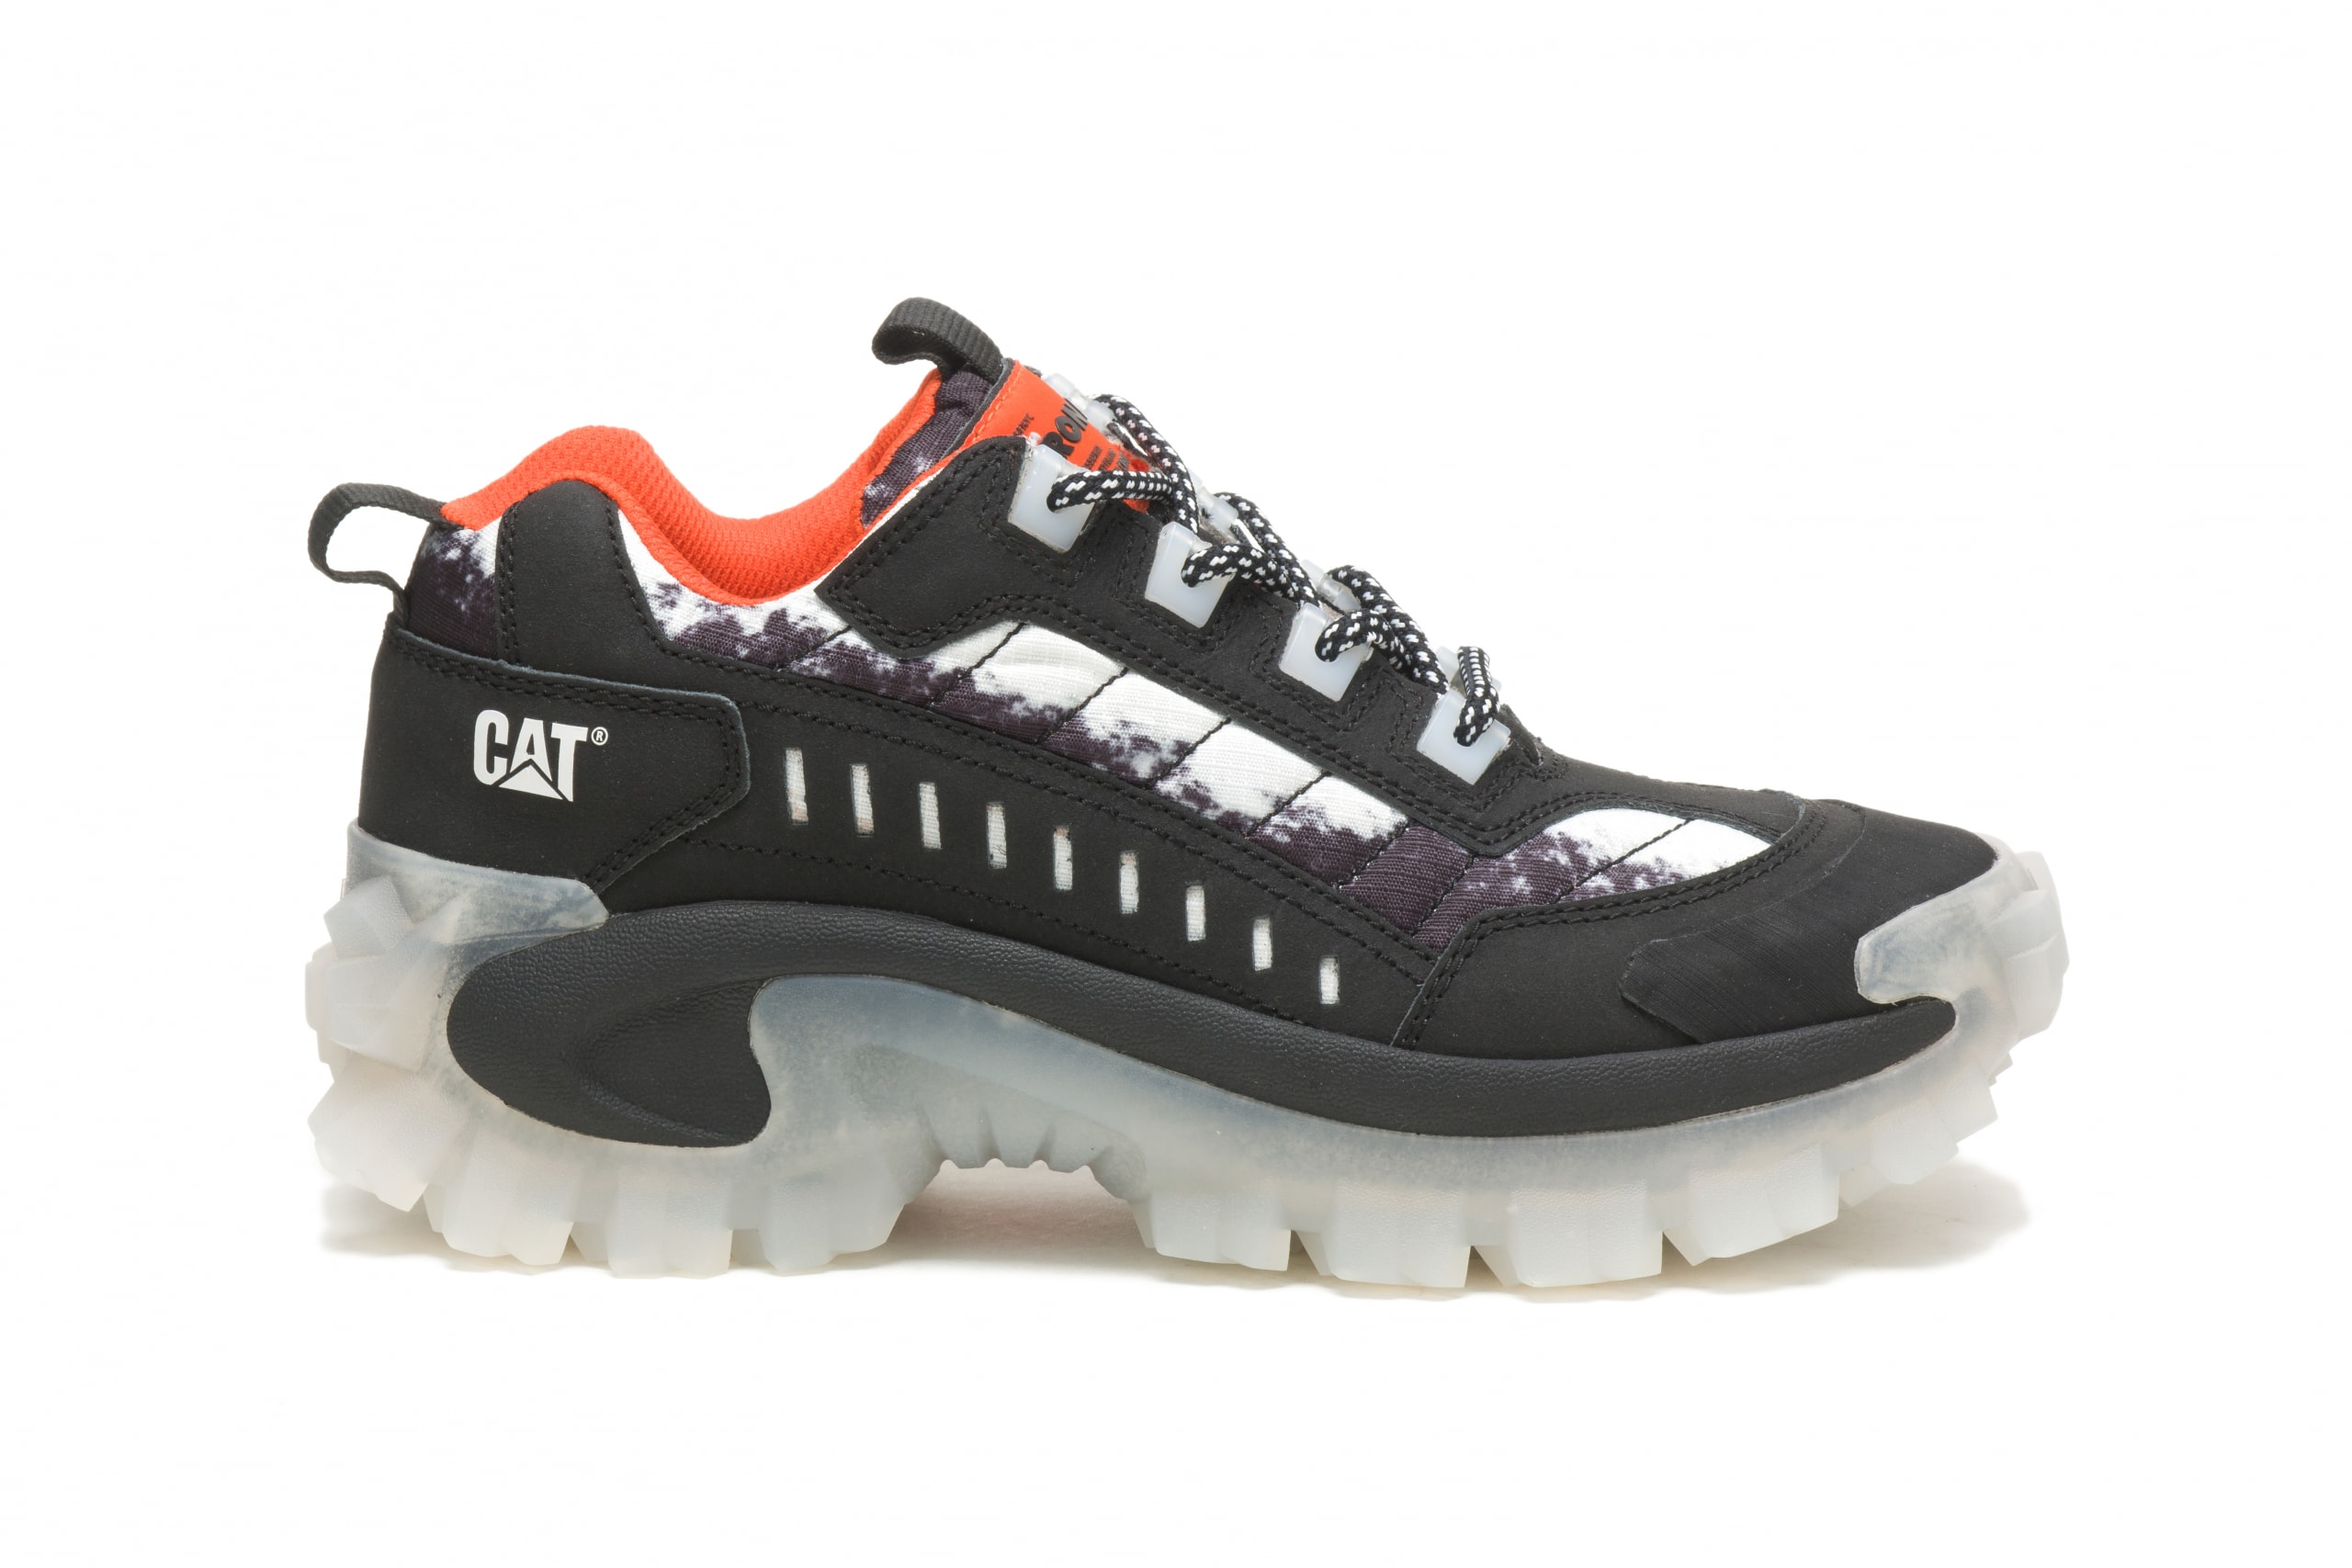 Heron Preston x CAT Footwear Collaboration Stormer Boot Intruder Shoe Sneaker